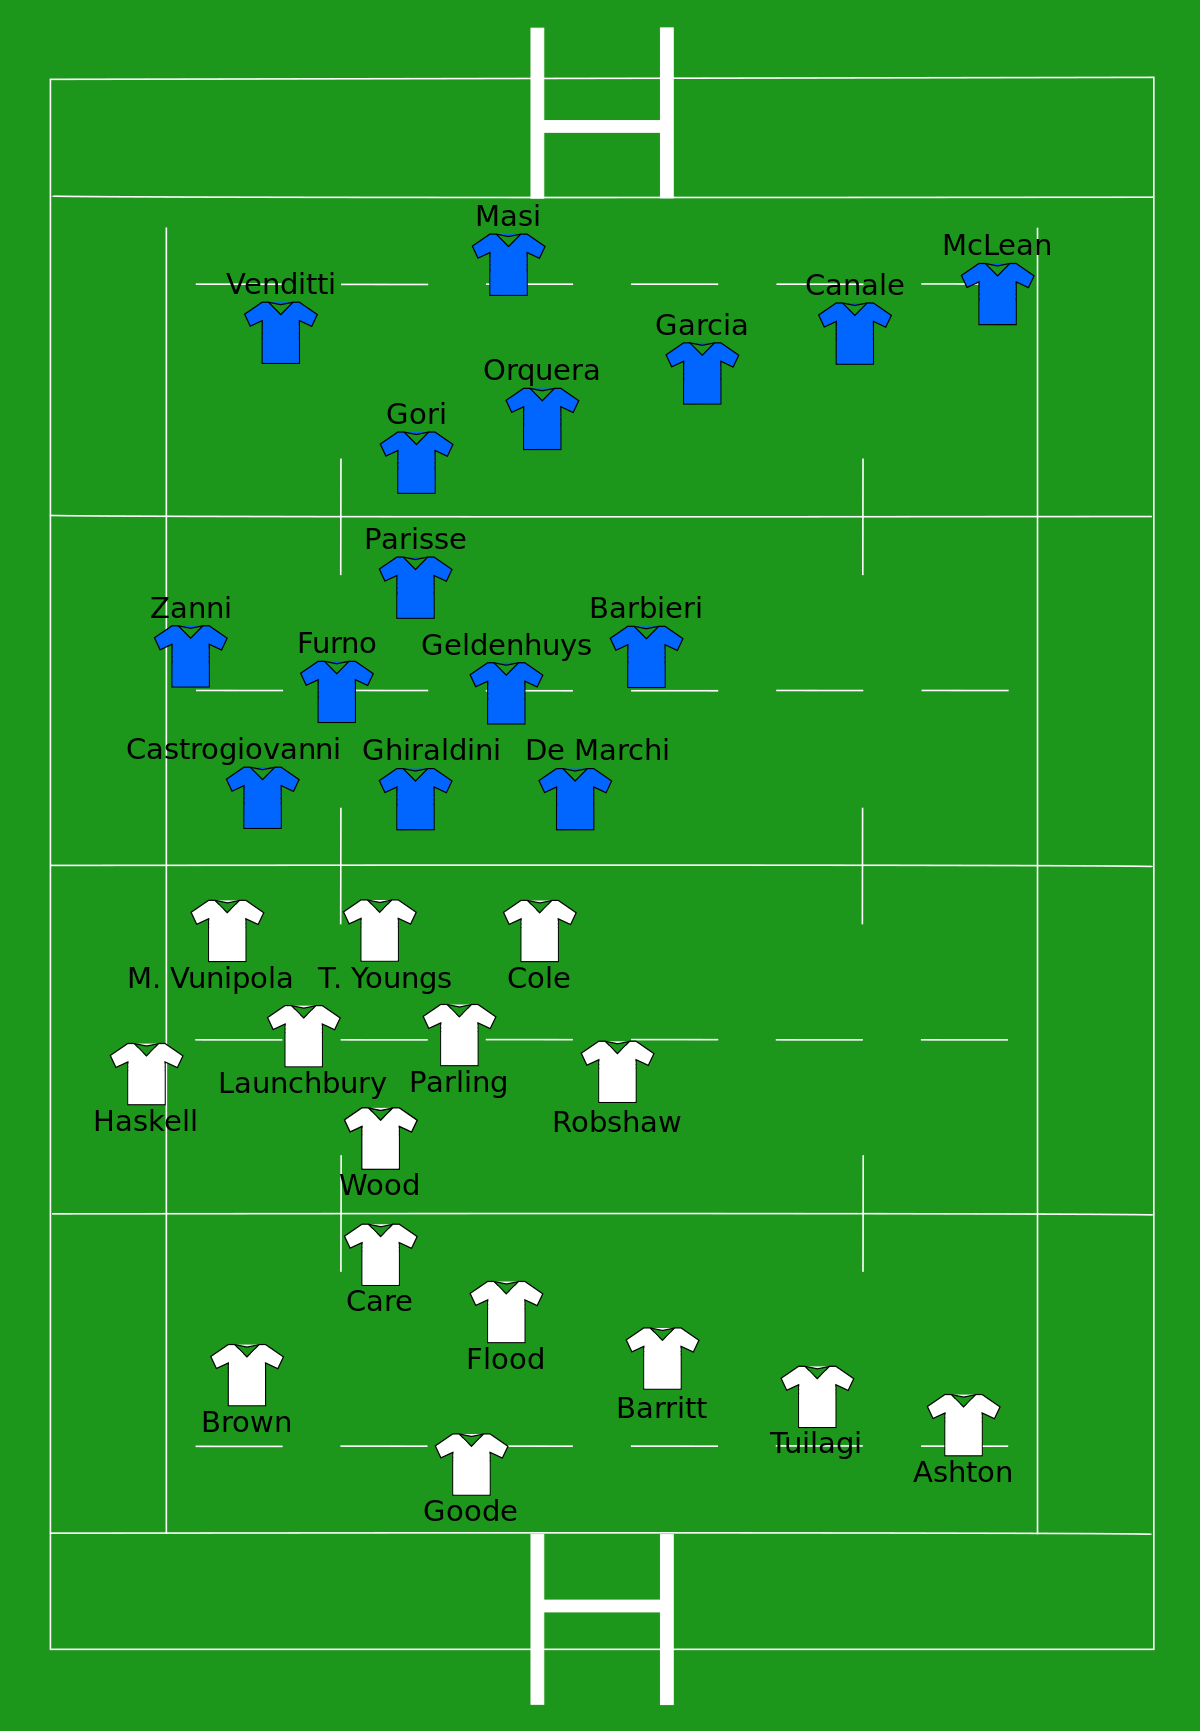 File:England vs Italy 2013-03-10.svg - Wikipedia